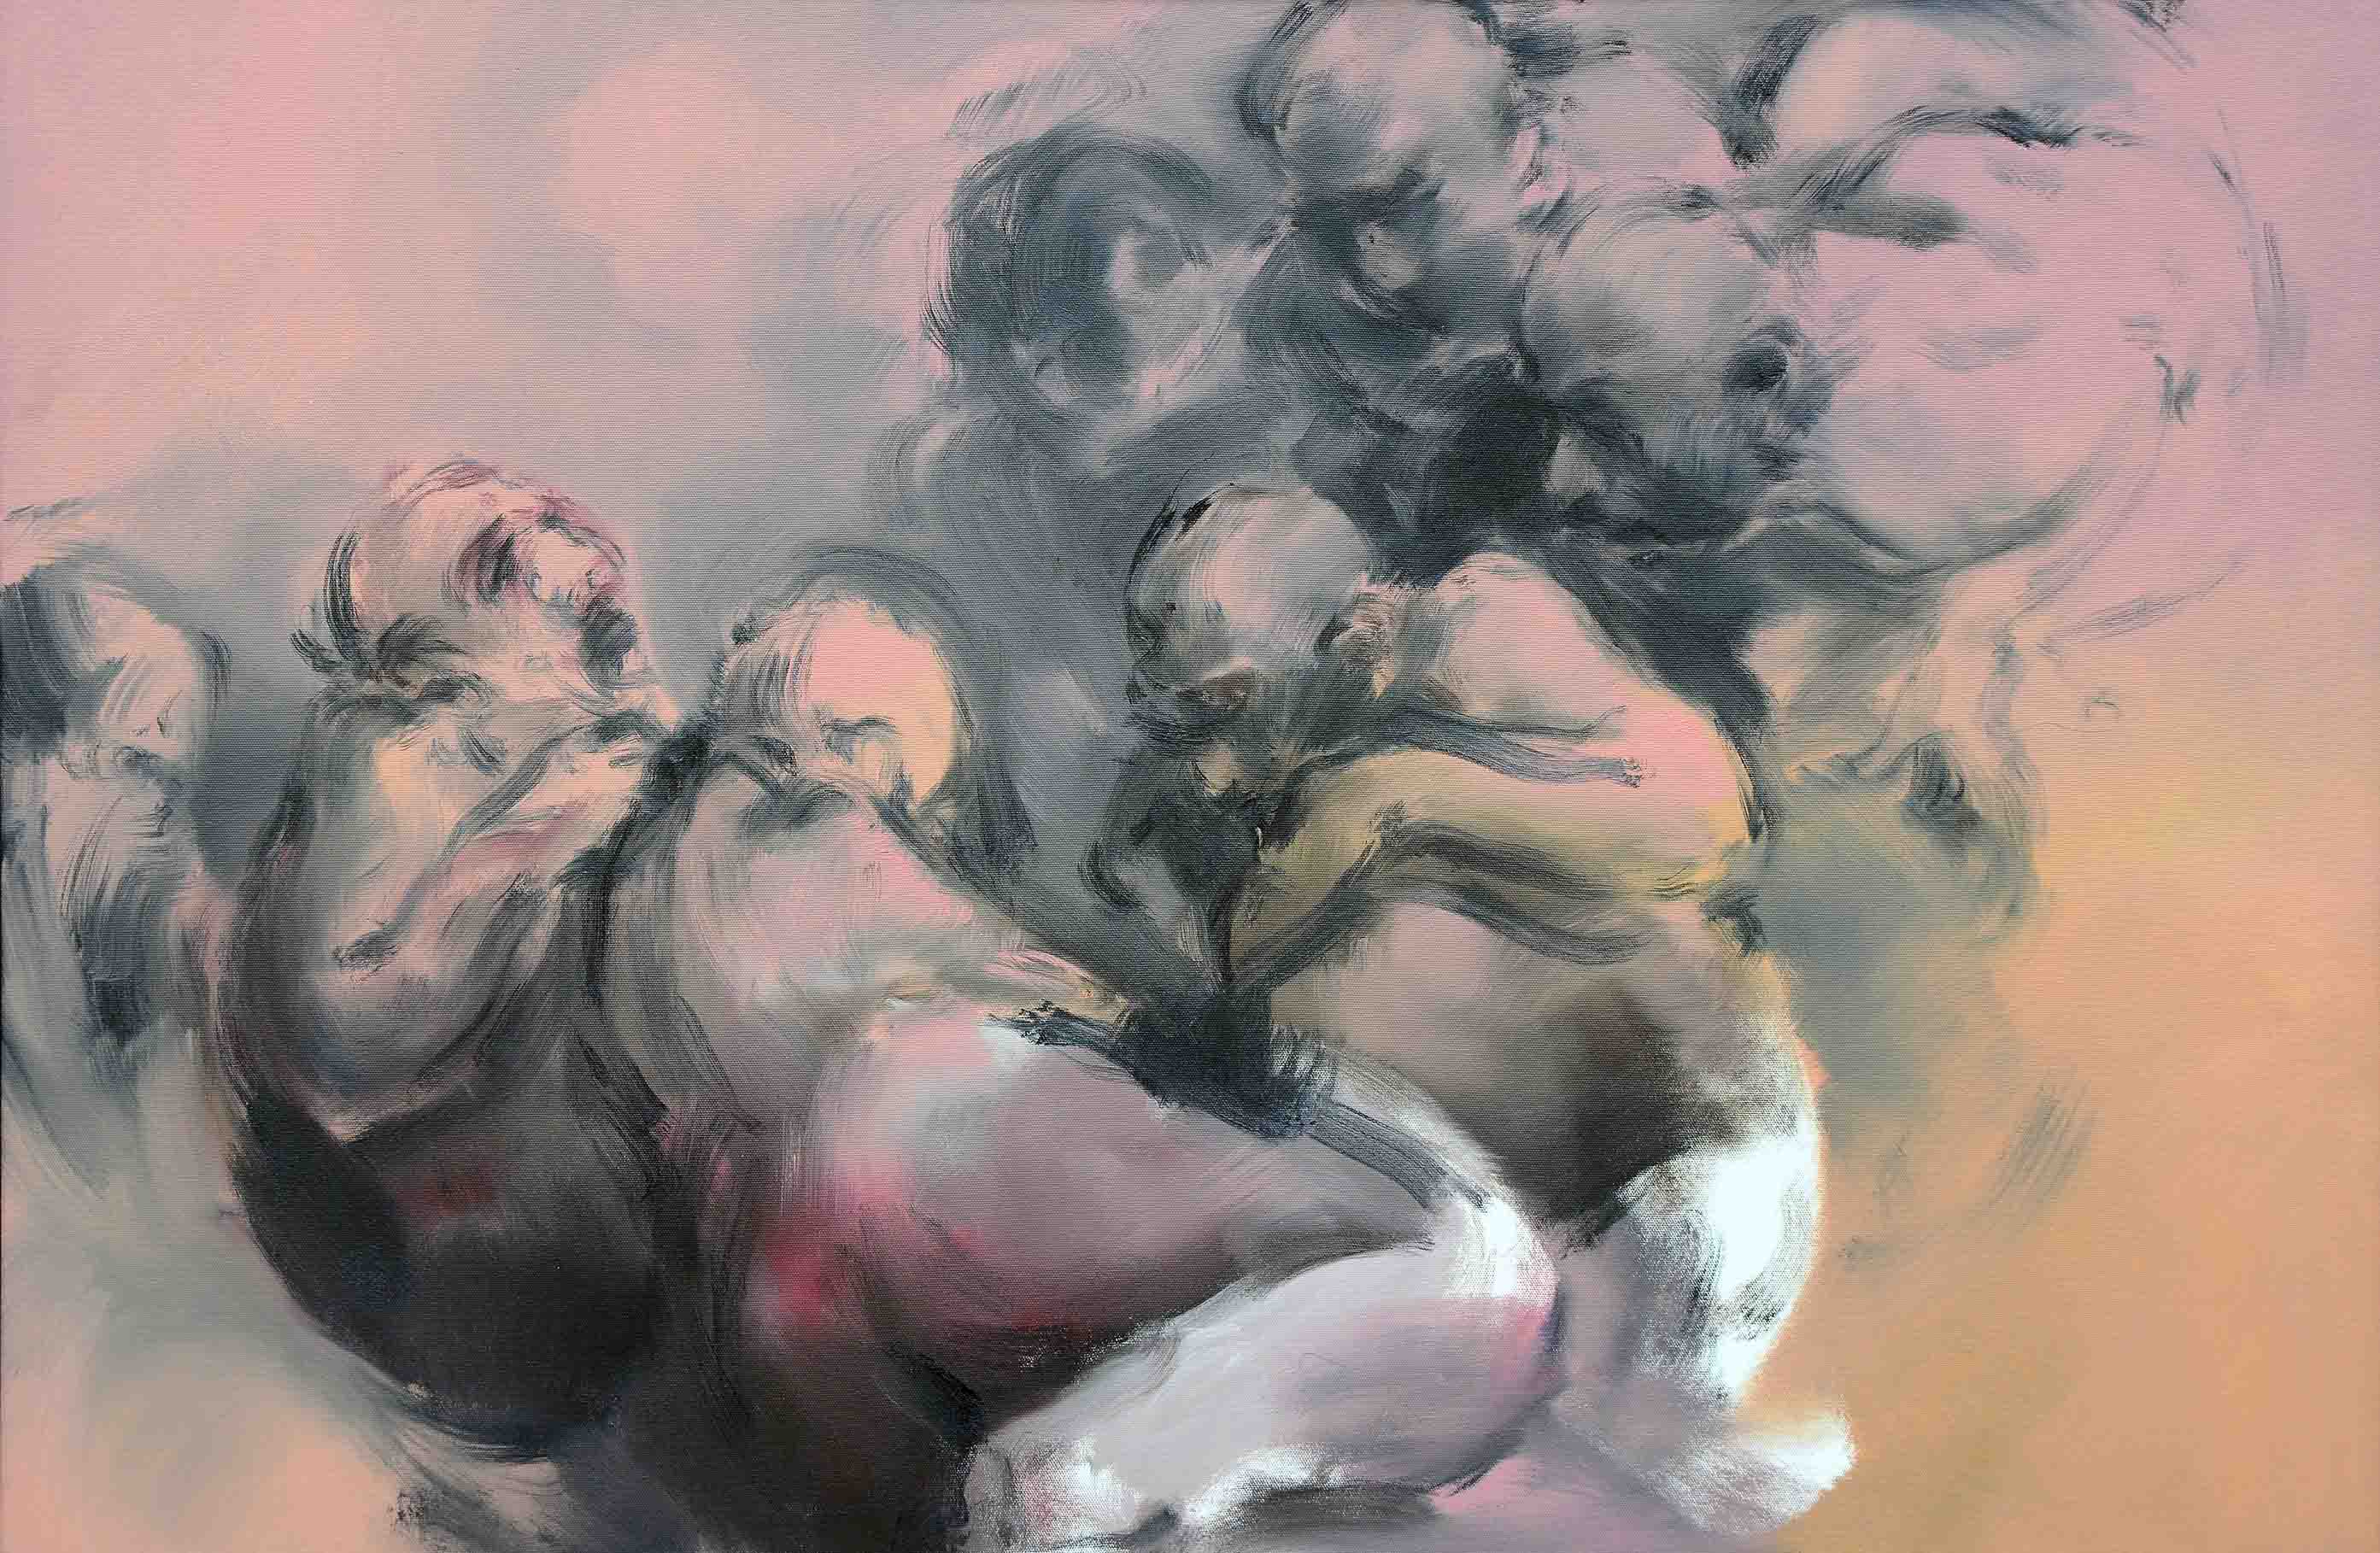 İsimsiz- Untitled,Tuval üzerine yağlıboya- Oil on canvas, 100x150 cm